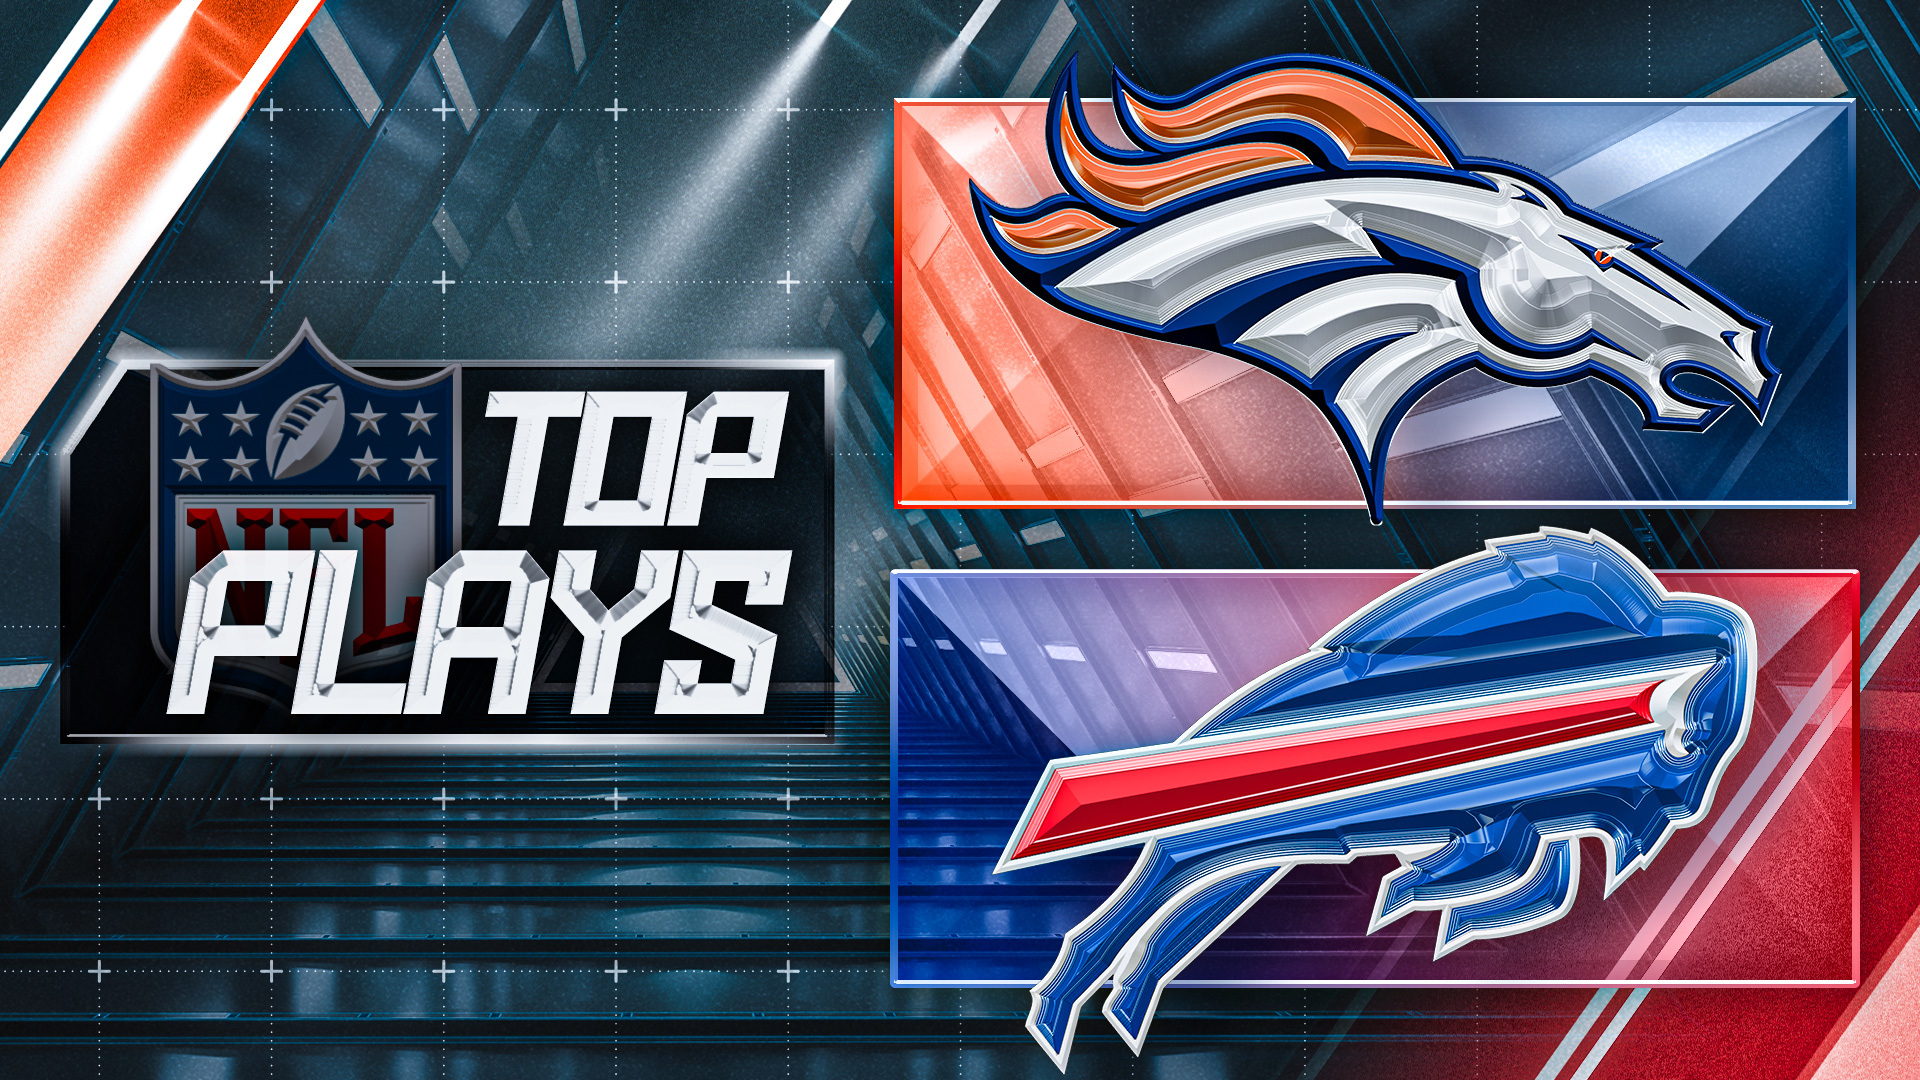 Monday Night Football highlights: Broncos stun Bills on game-winning field goal